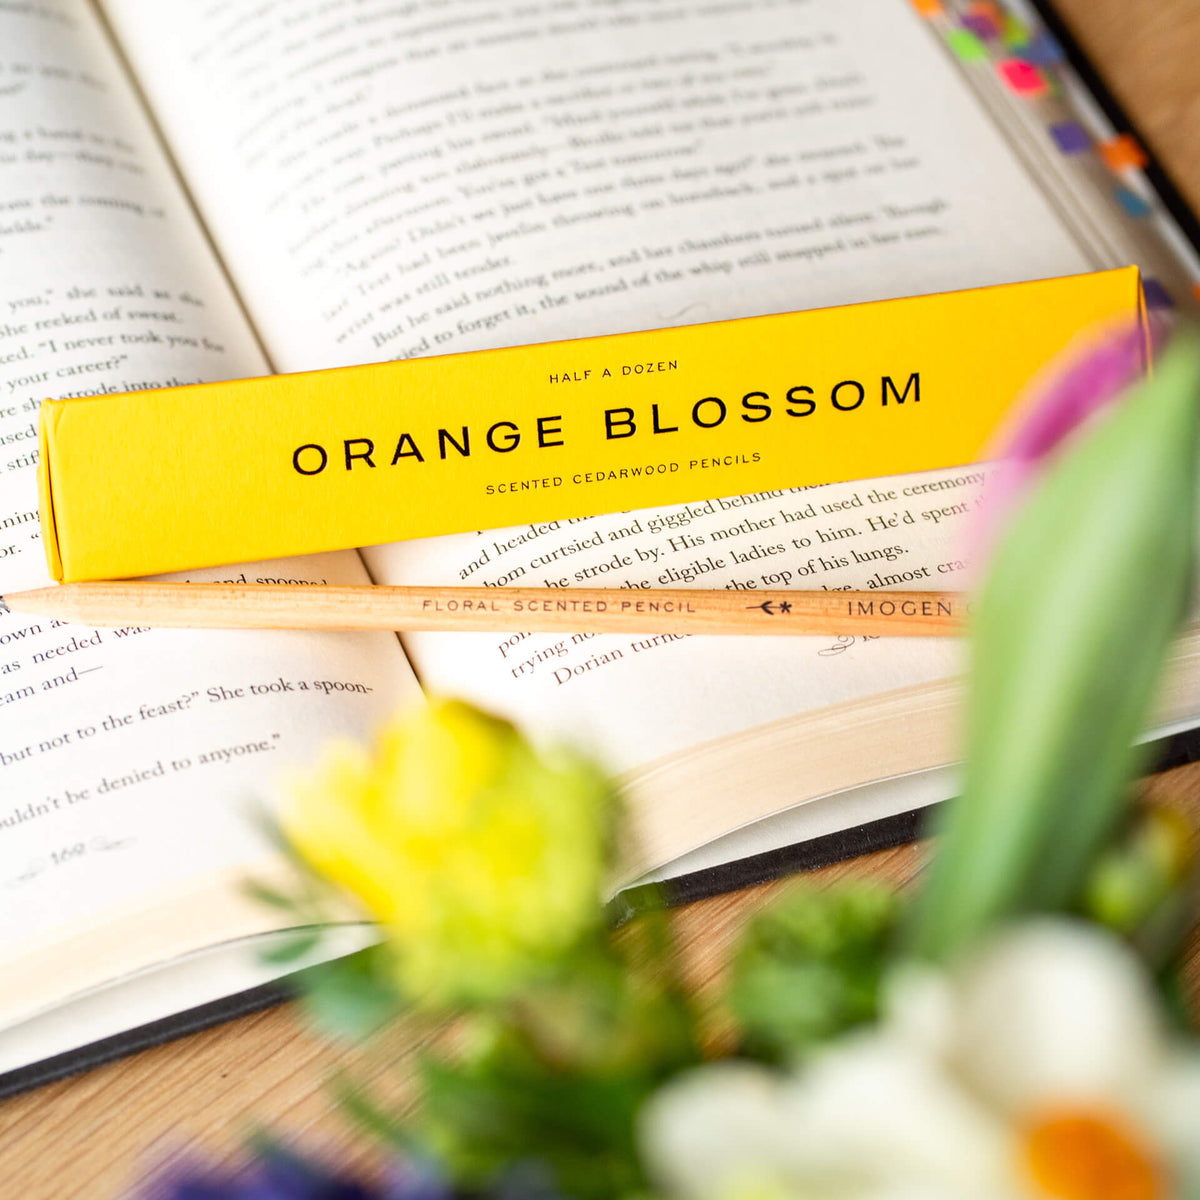 Orange Blossom scented pencils